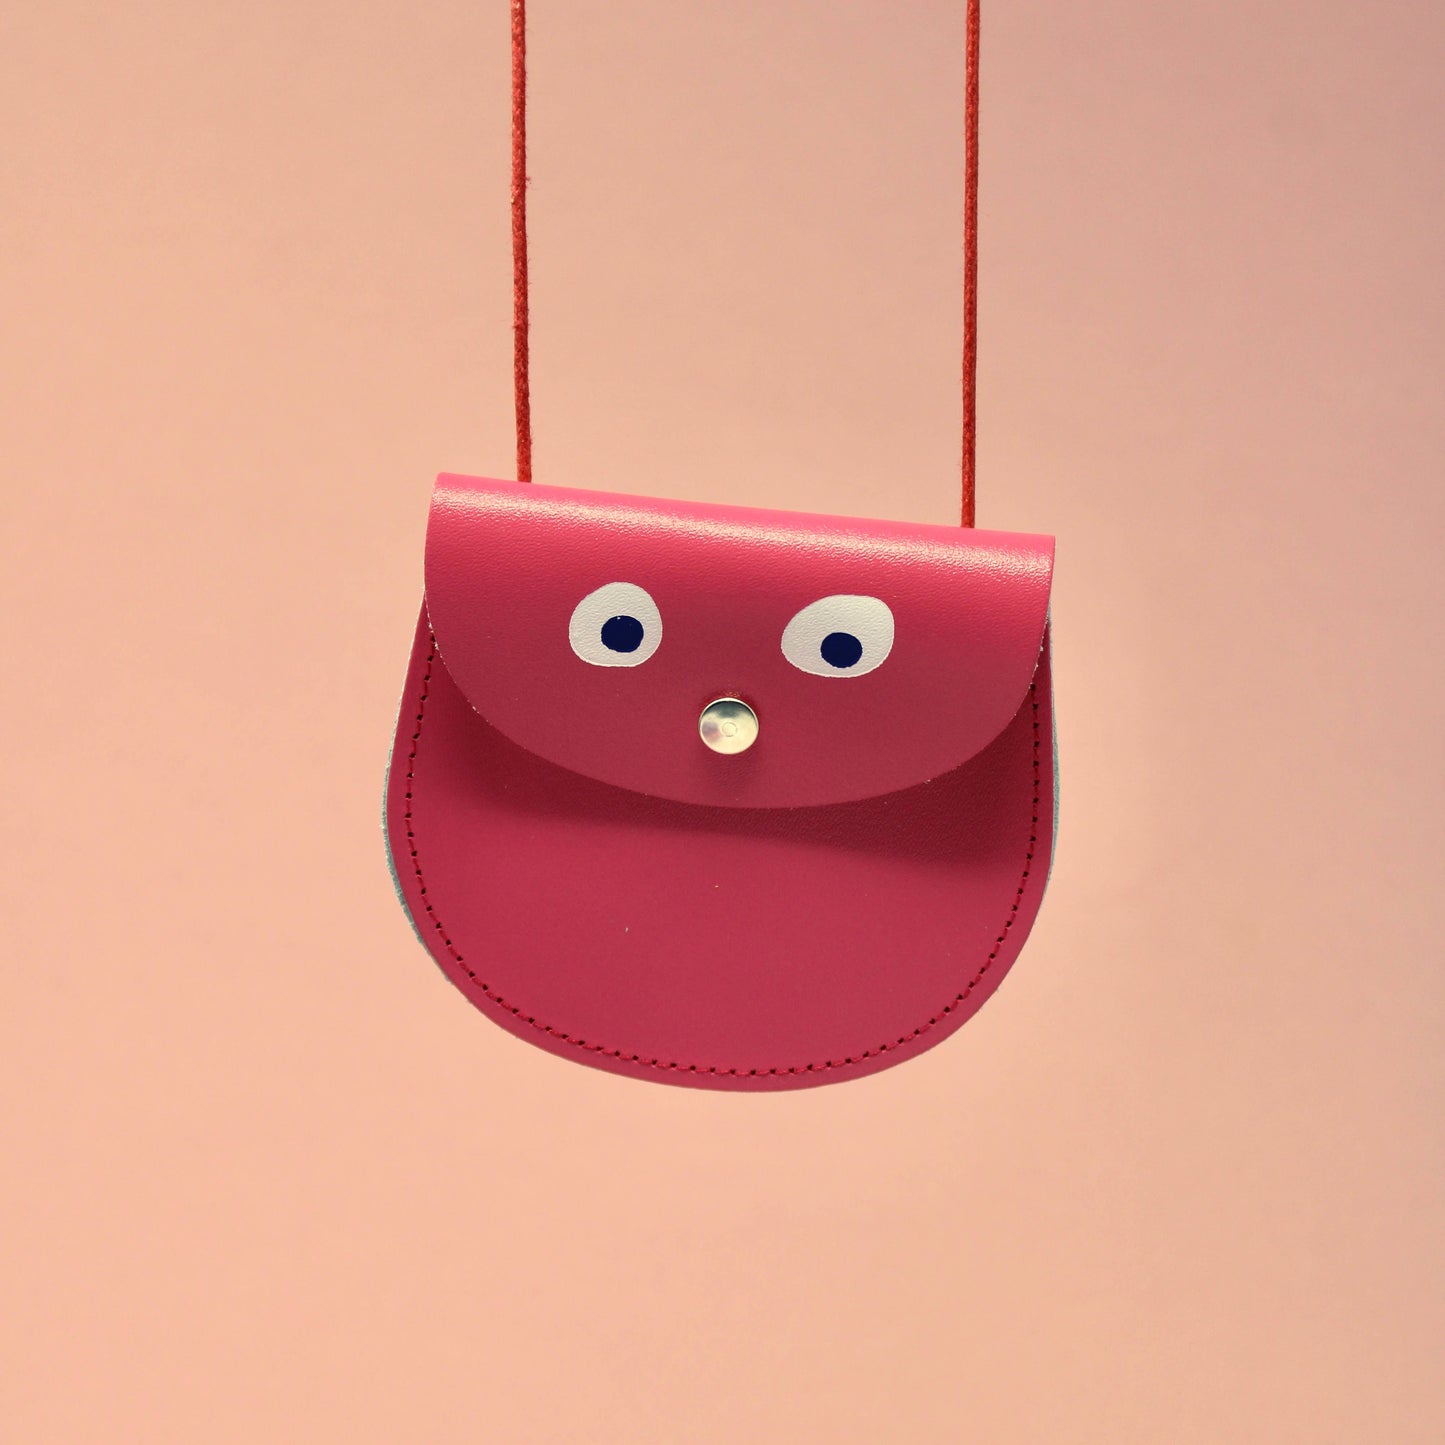 googly eye pocket money purse - hot pink